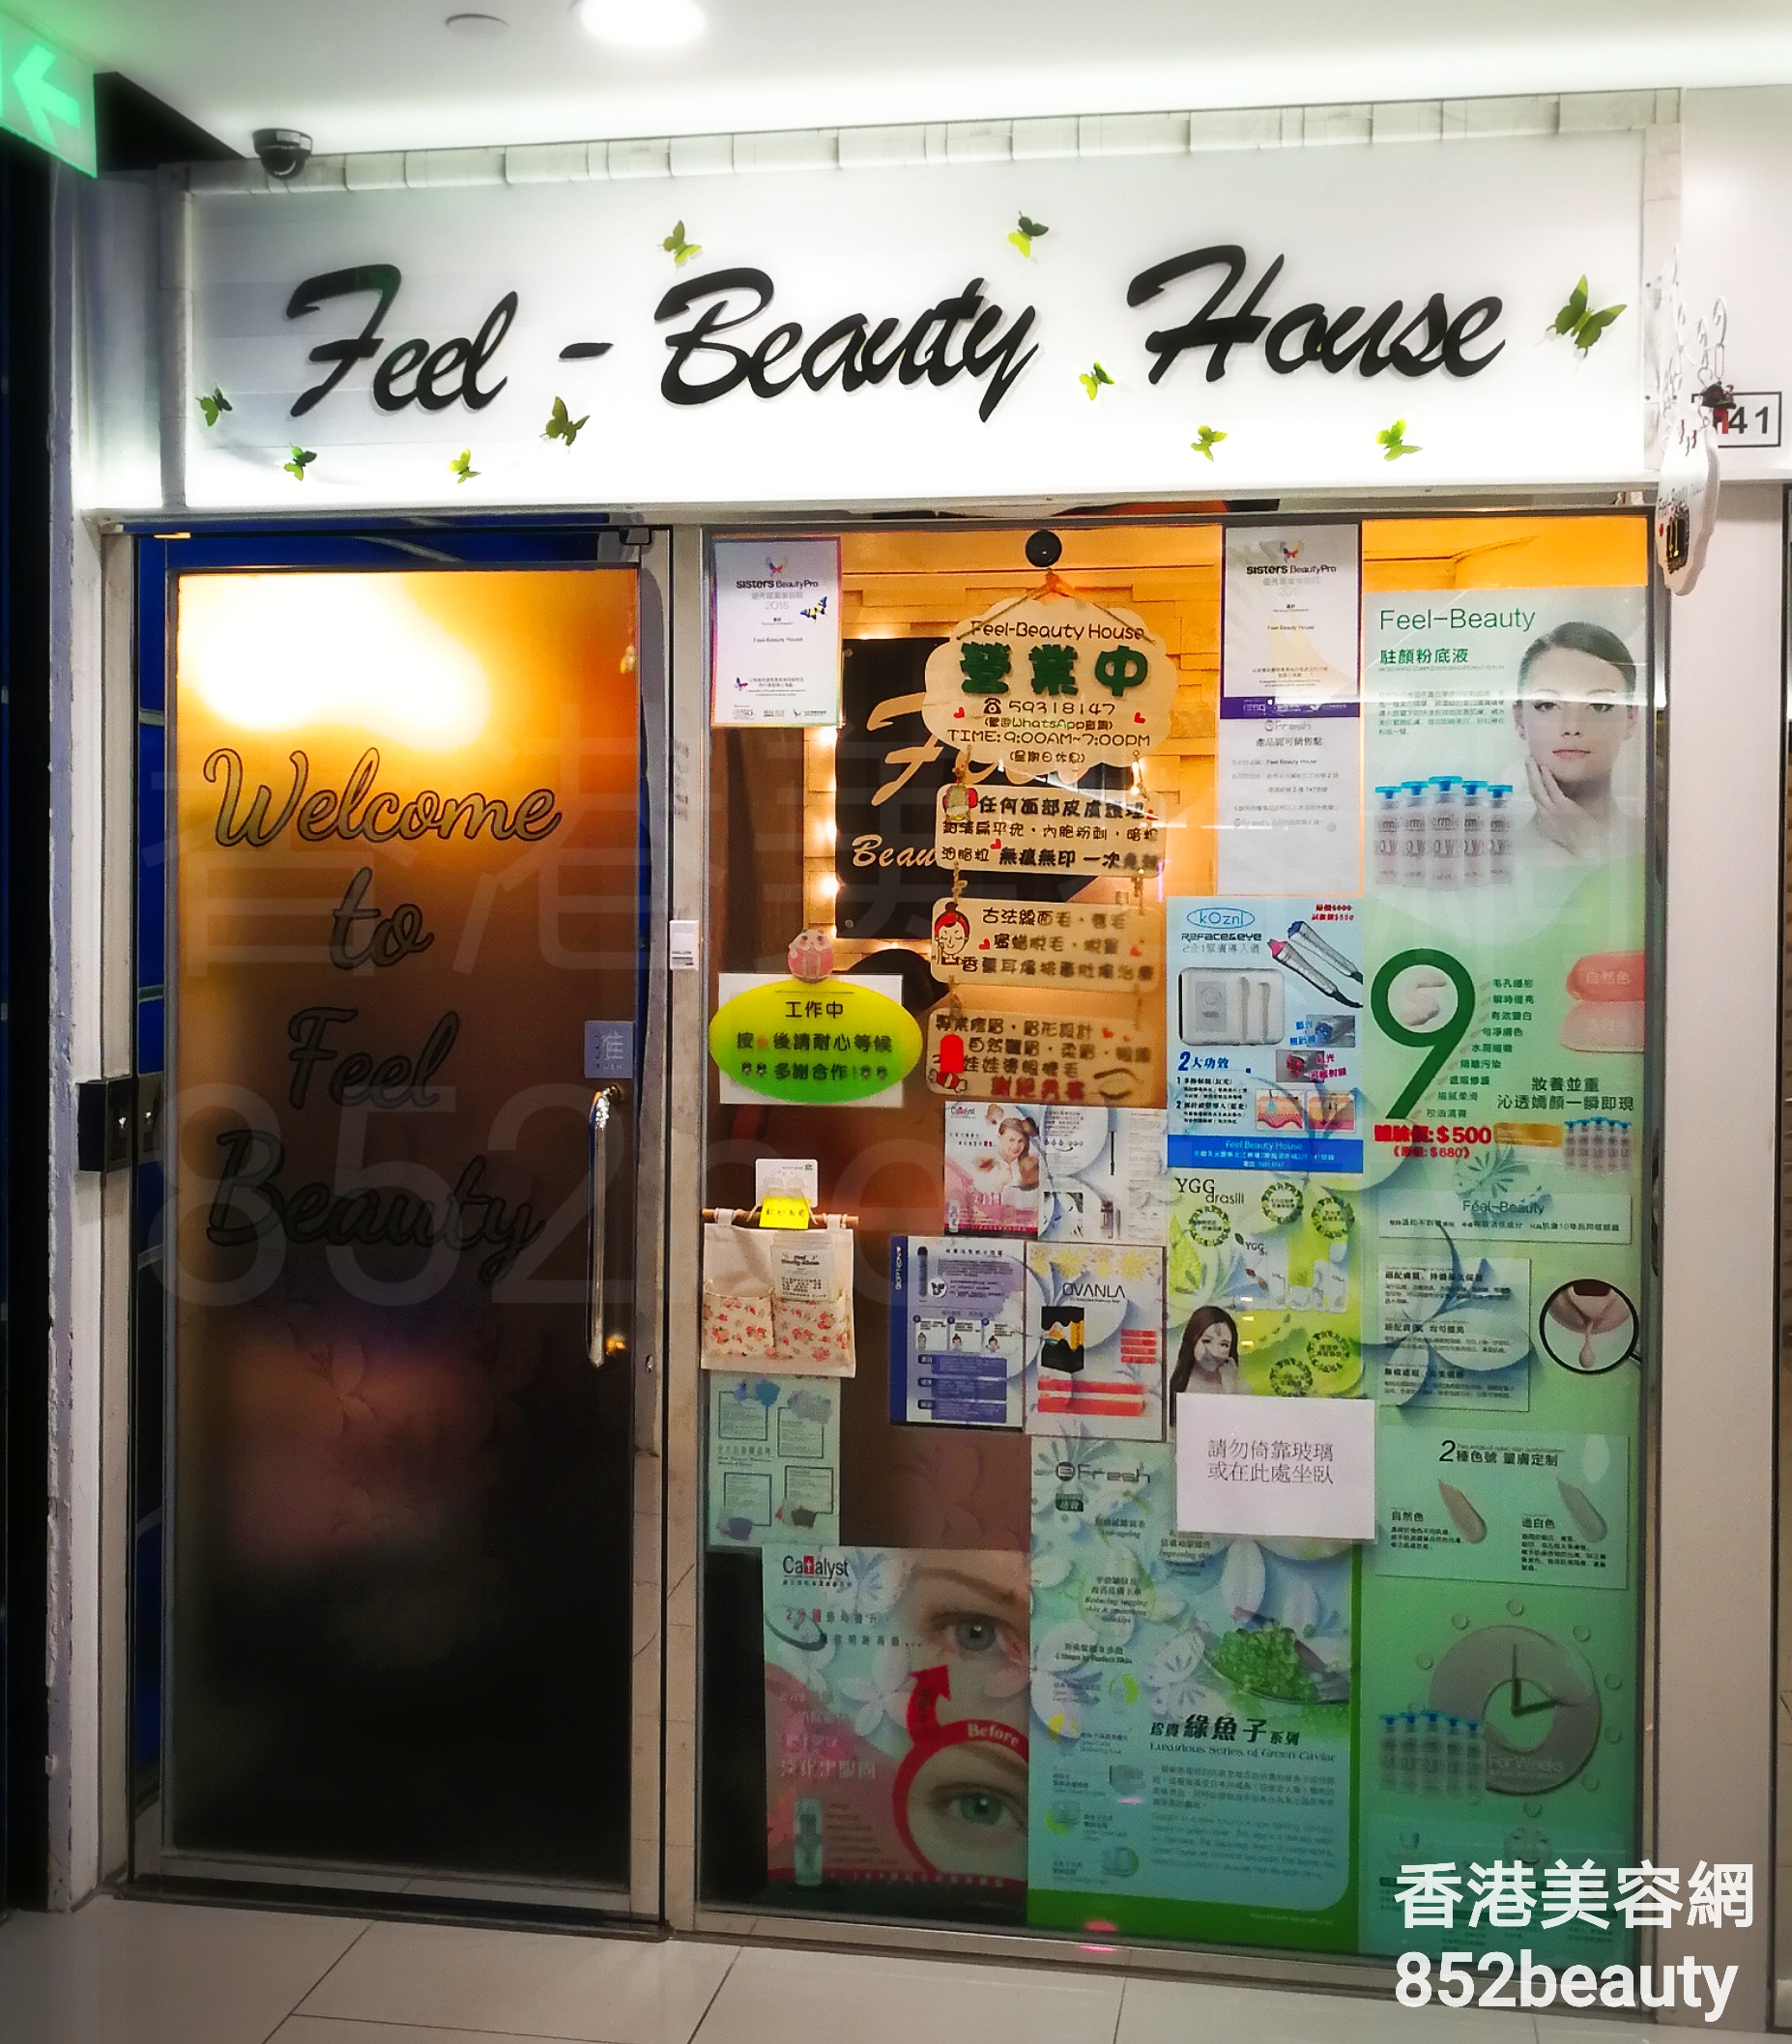 Facial Care: Feel-Beauty House